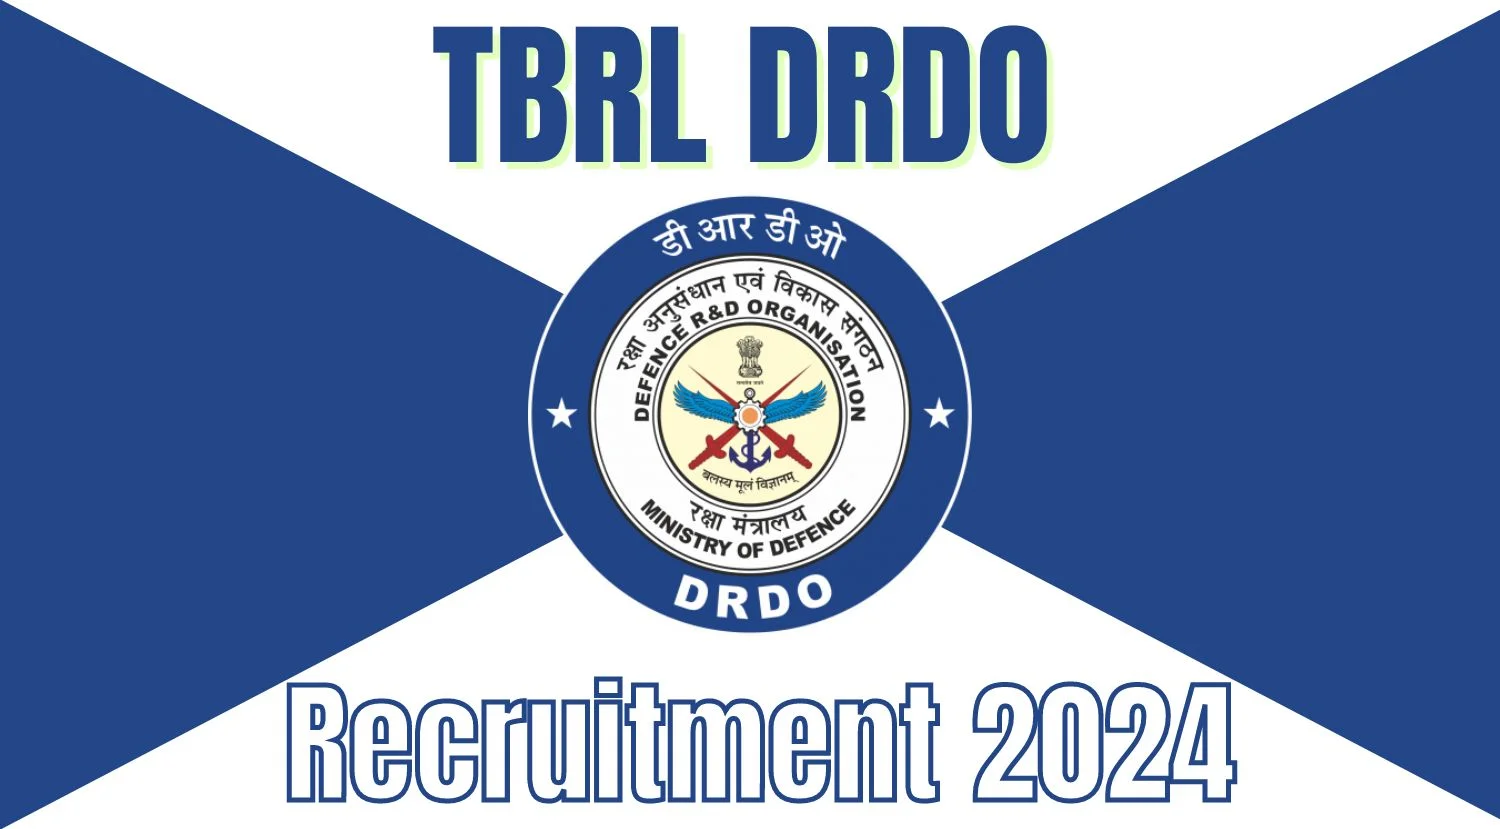 TBRL DRDO Recruitment 2024